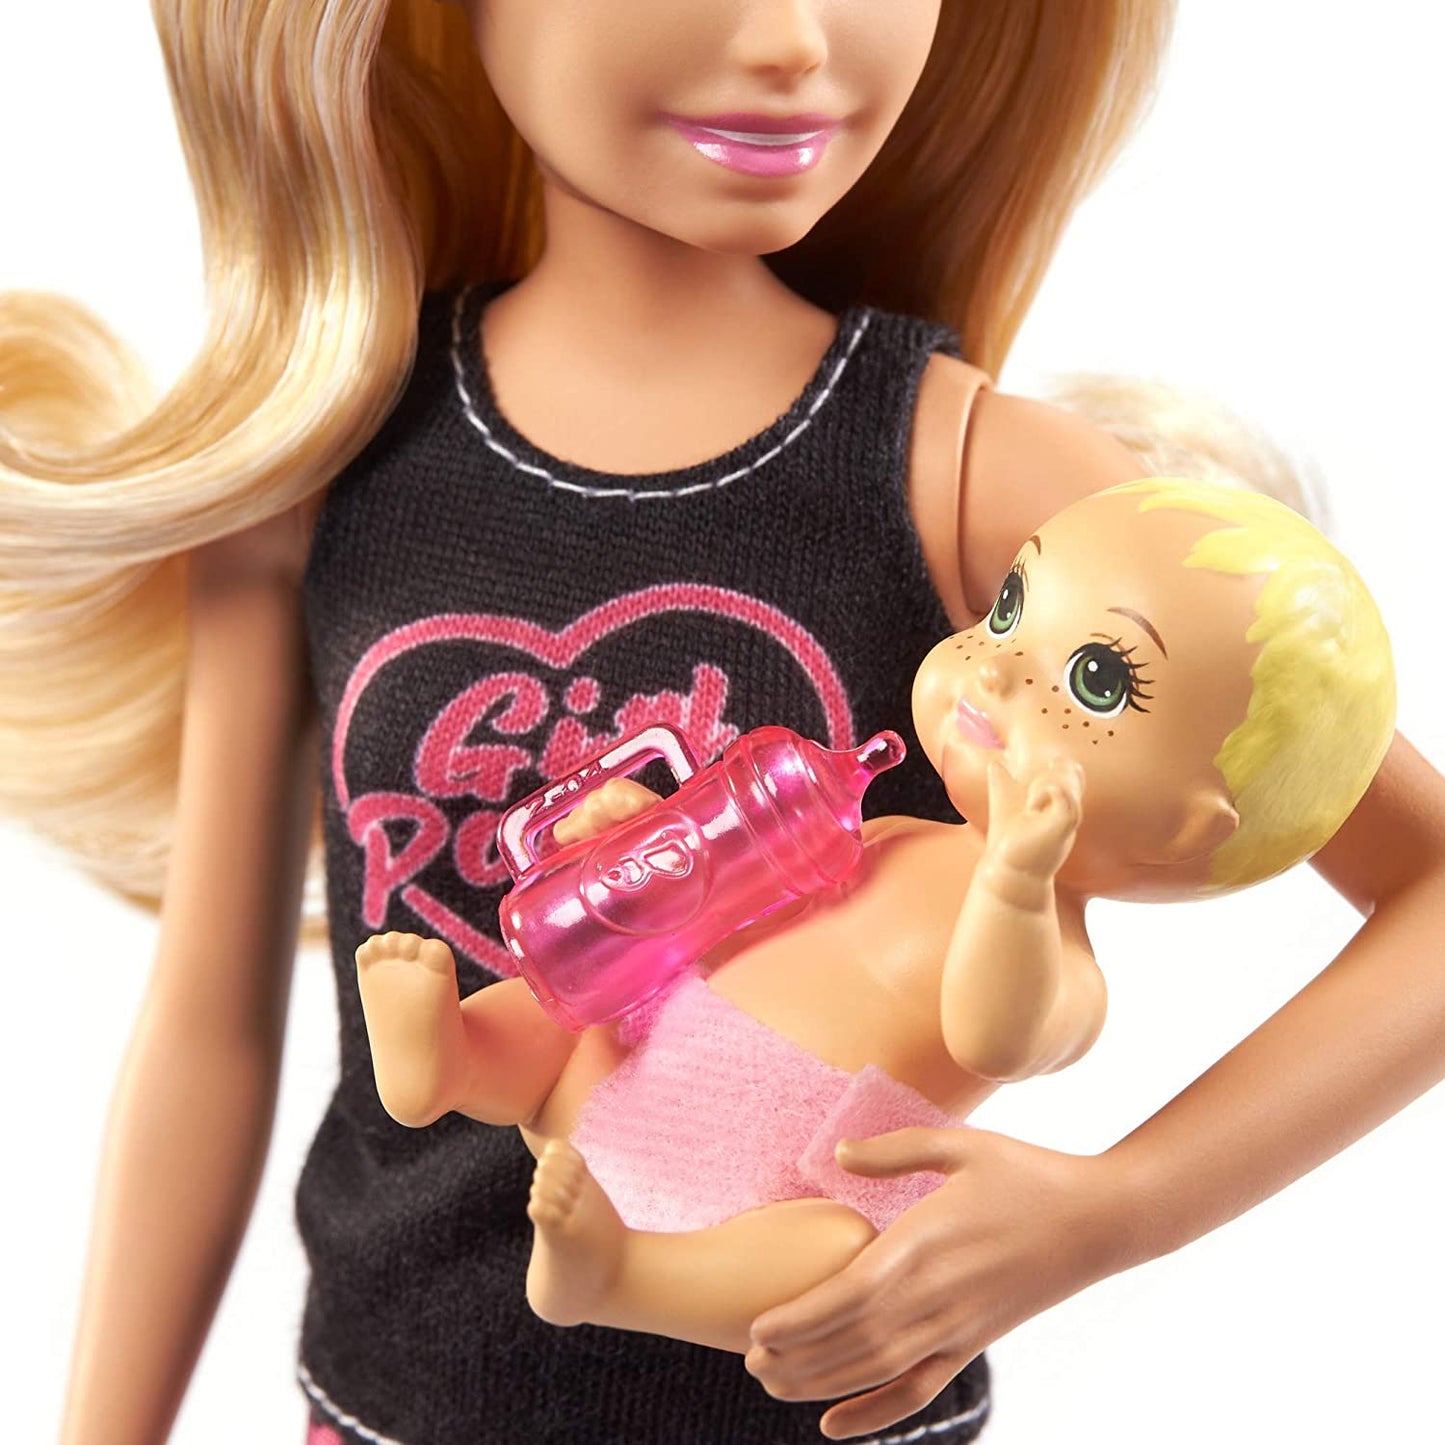 Barbie - Skipper Blonde Babysitter Doll